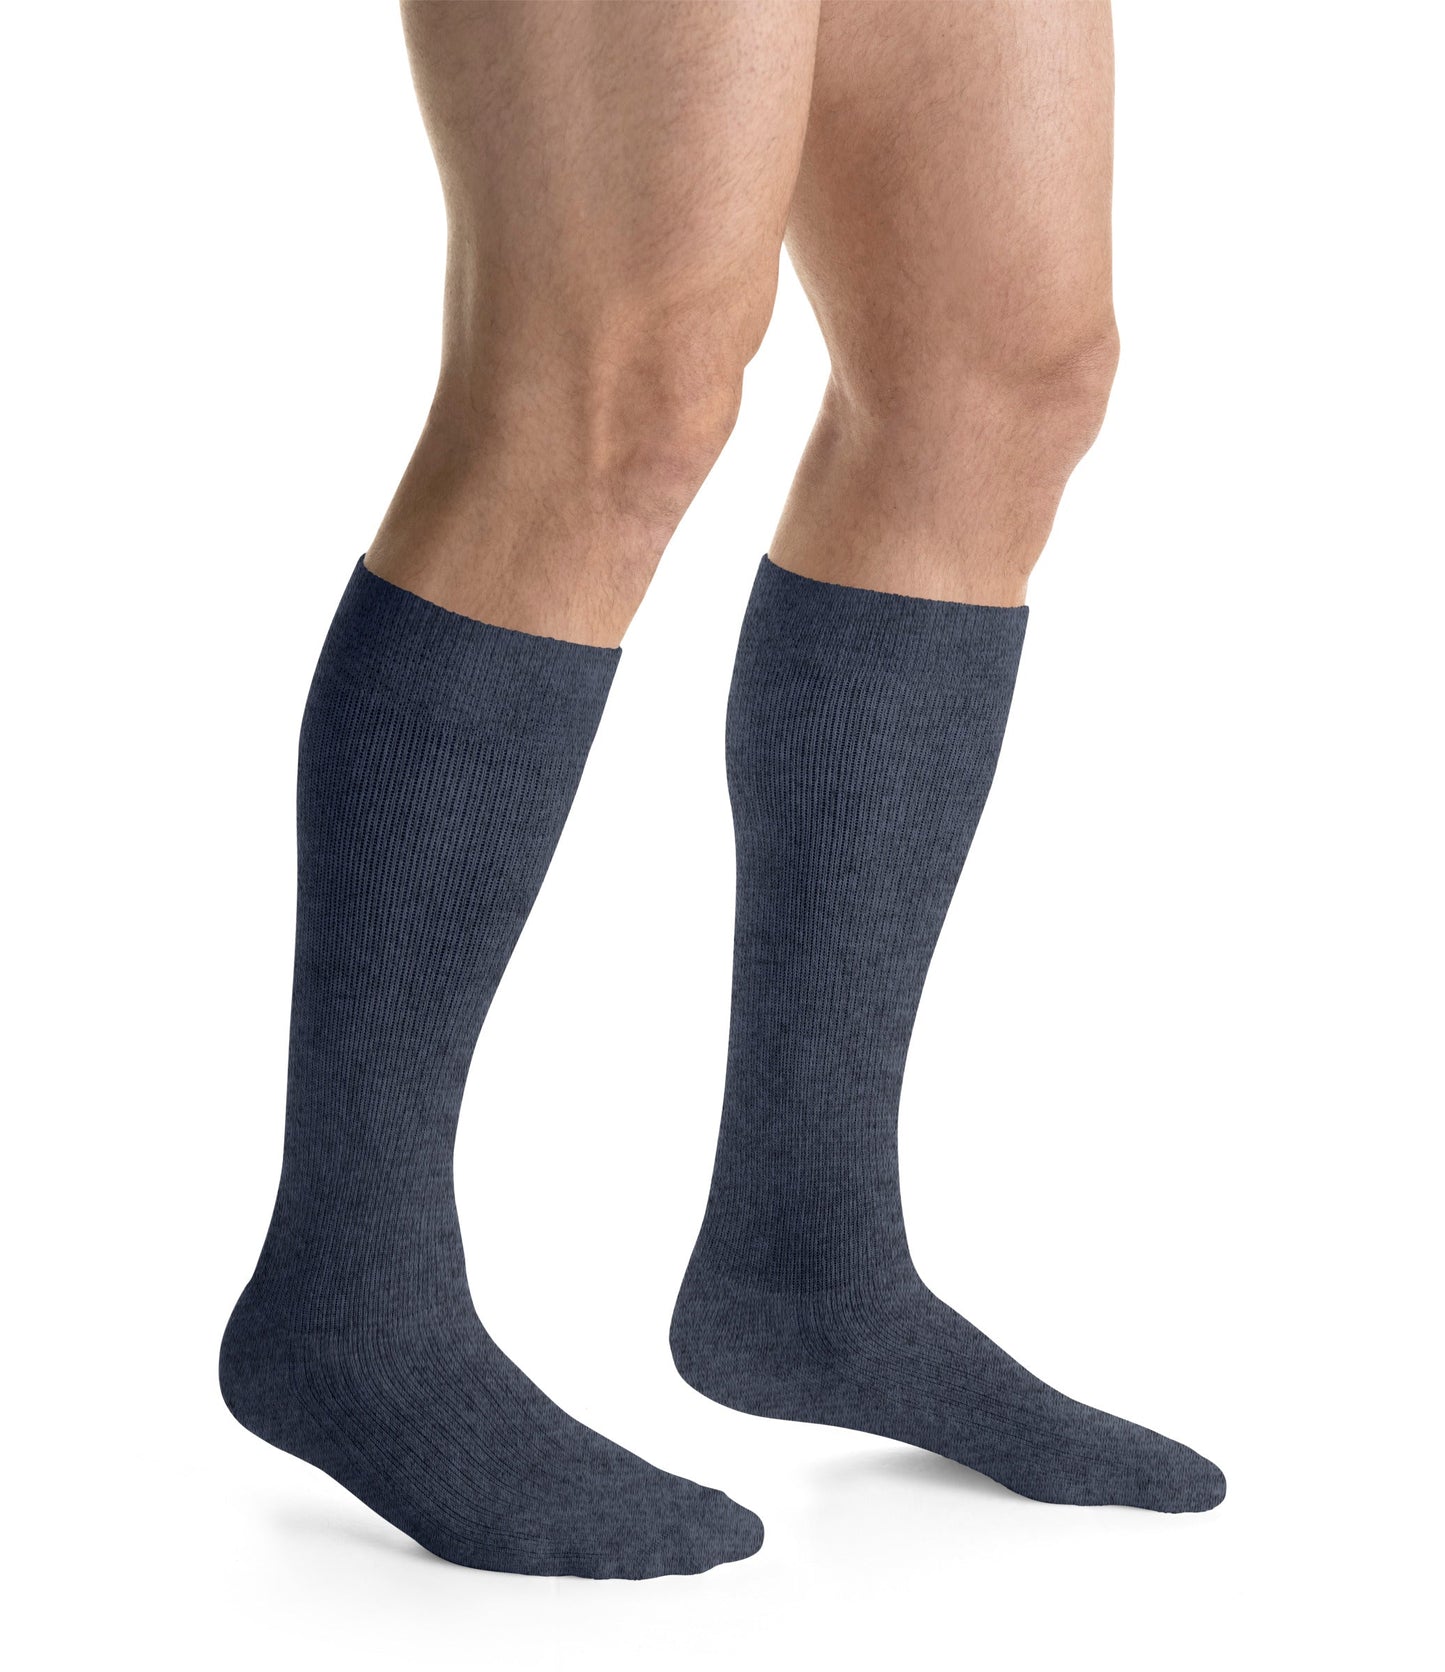 JOBST ActiveWear Compression Socks 20-30 mmHg, Knee High, Closed Toe Full Calf